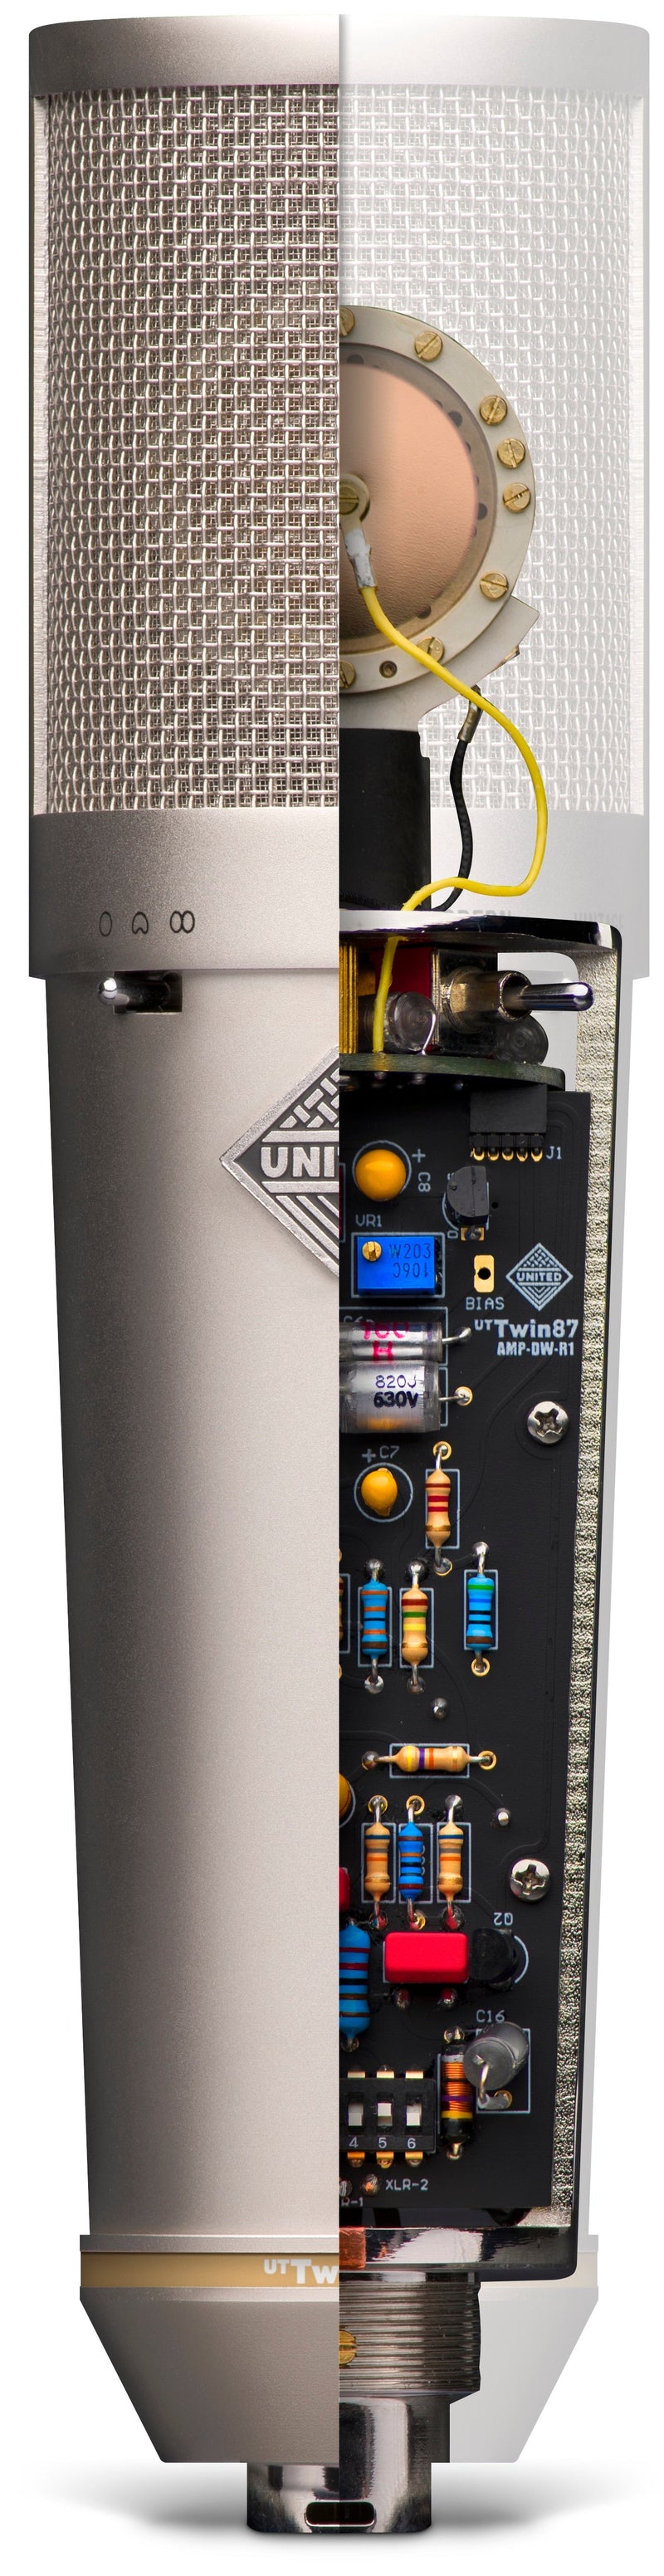 United Studio Technologies UT Twin87 Twin-Circuit Large Condenser Microphone - Full Warranty!